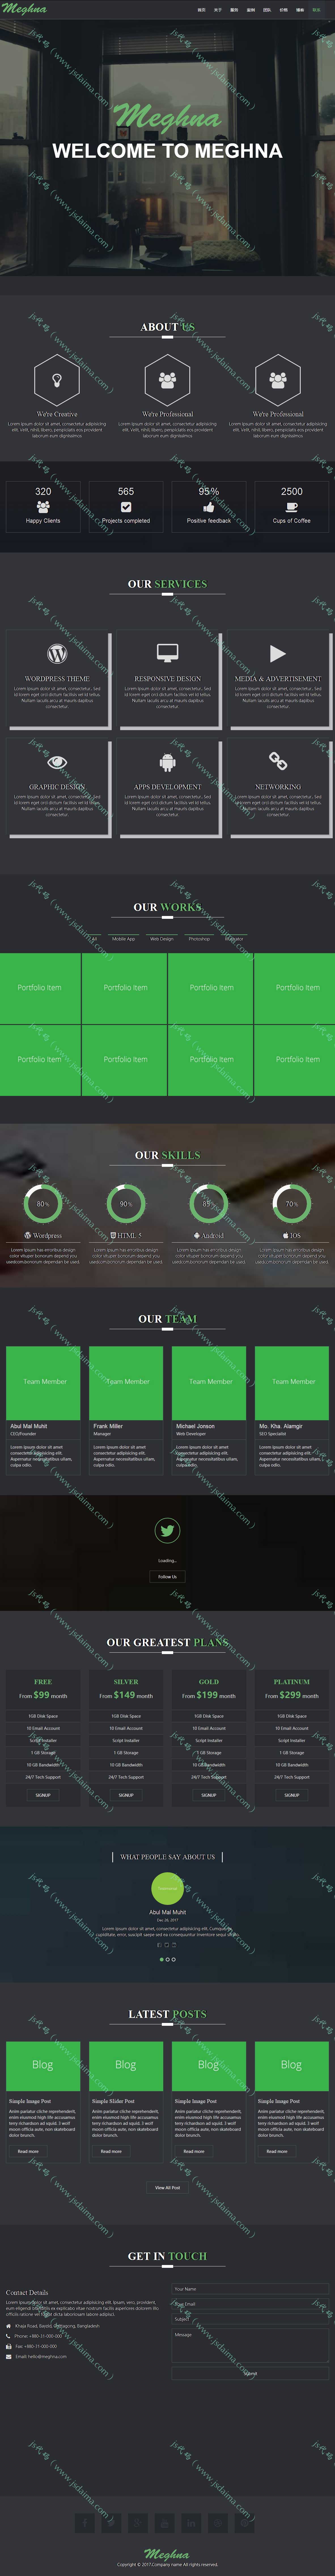 HTML5绿色高端大气响应式网络科技服务公司网站模板